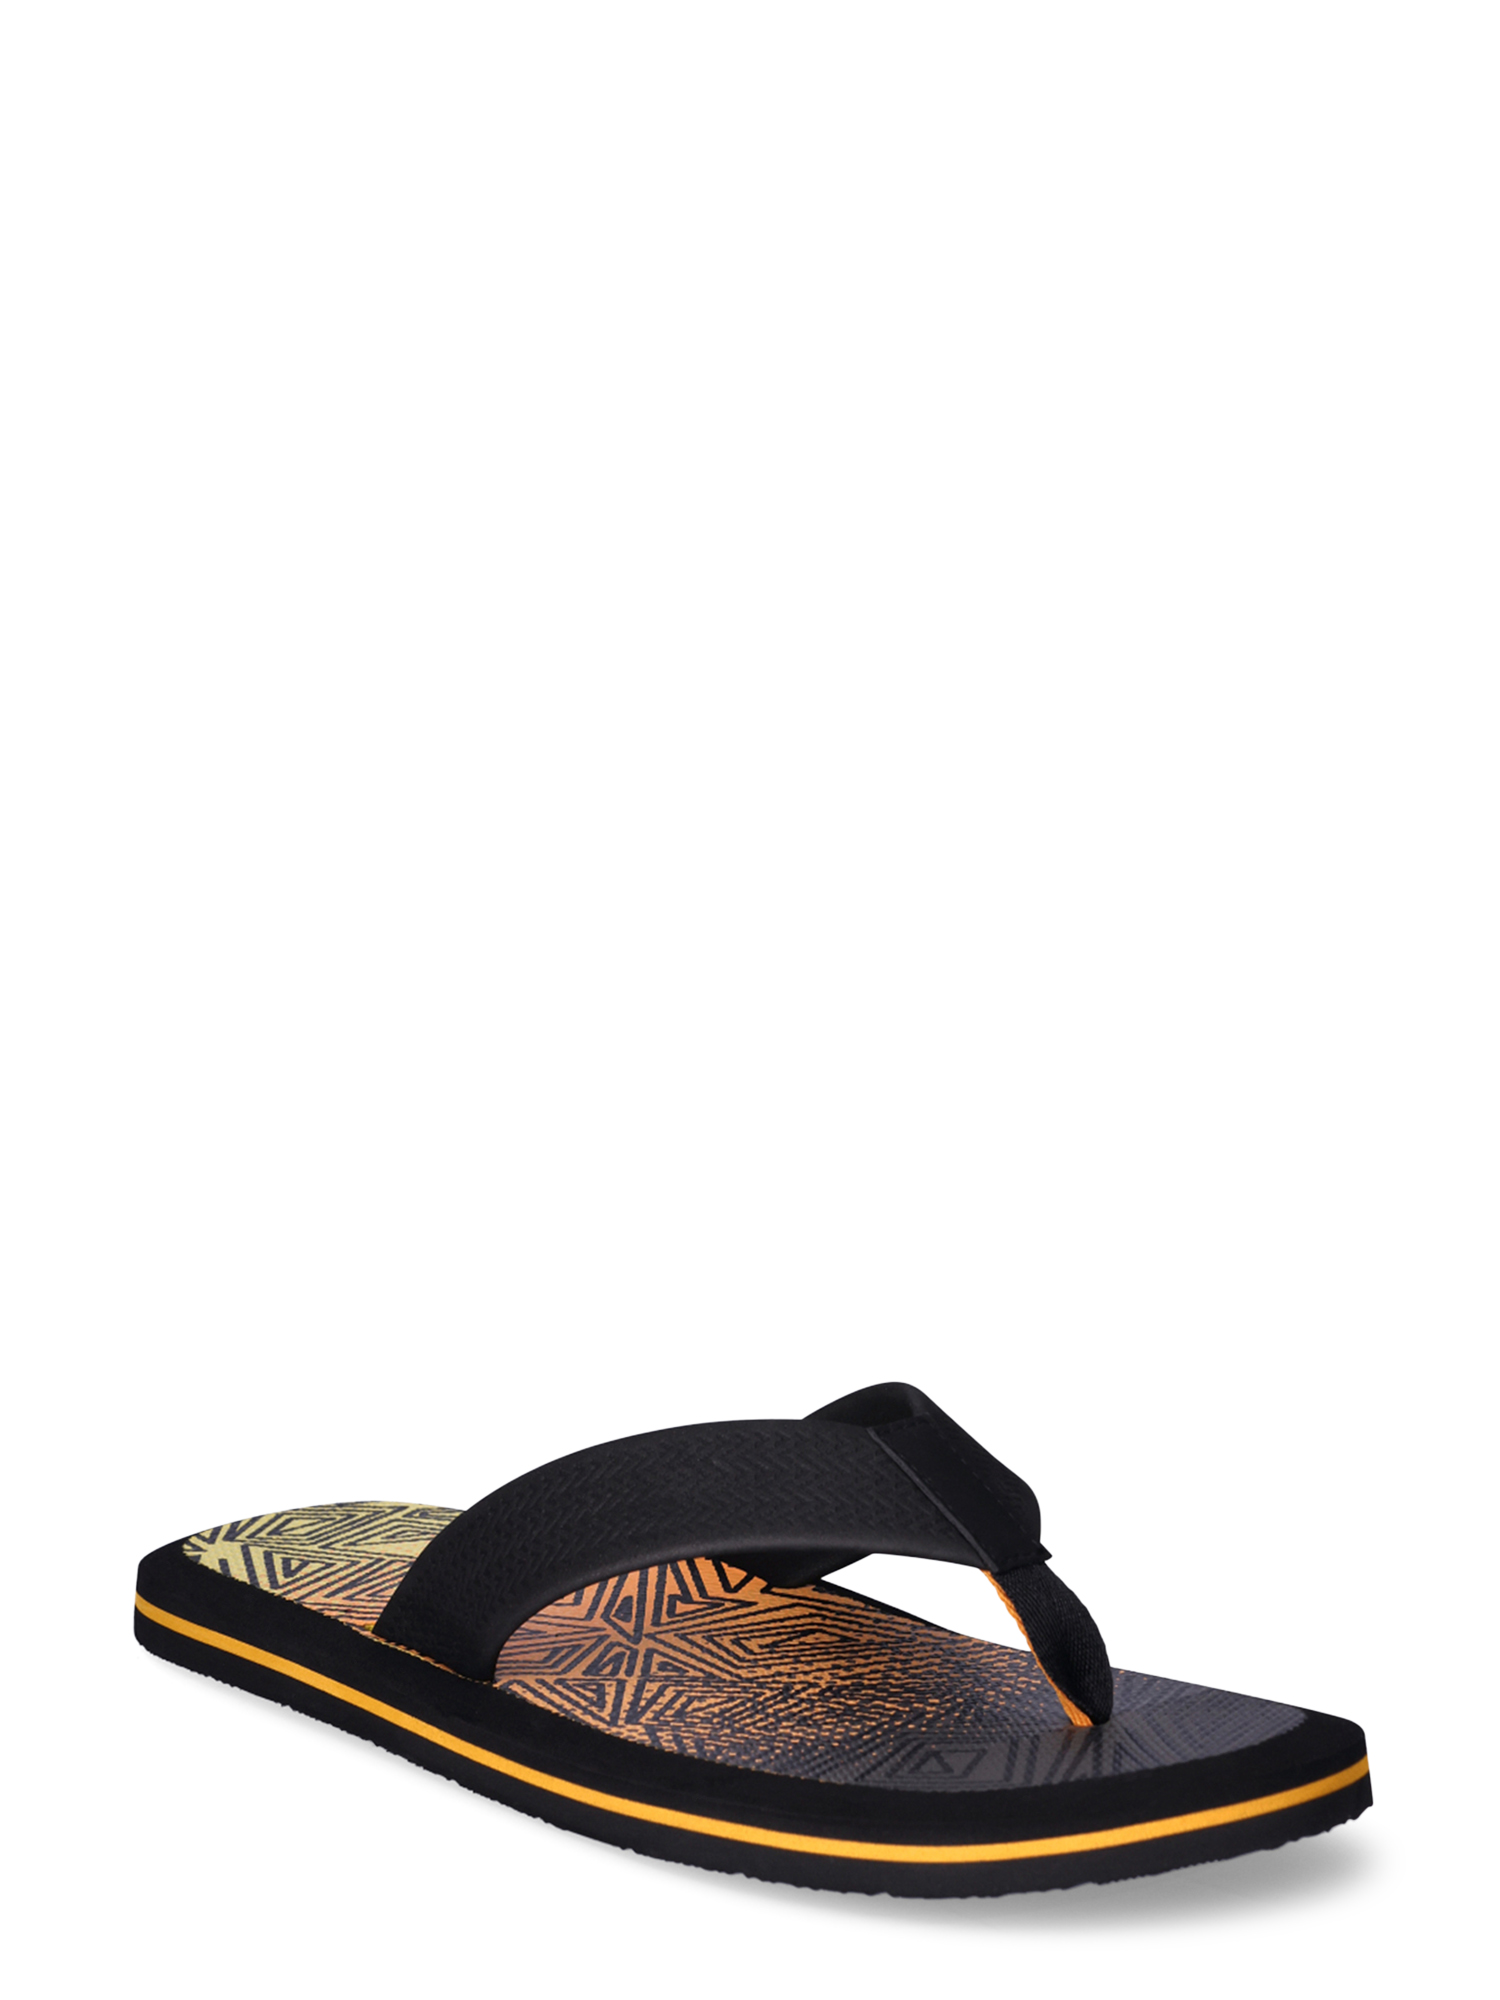 George Men's Ocean Flip Sandals - image 1 of 7